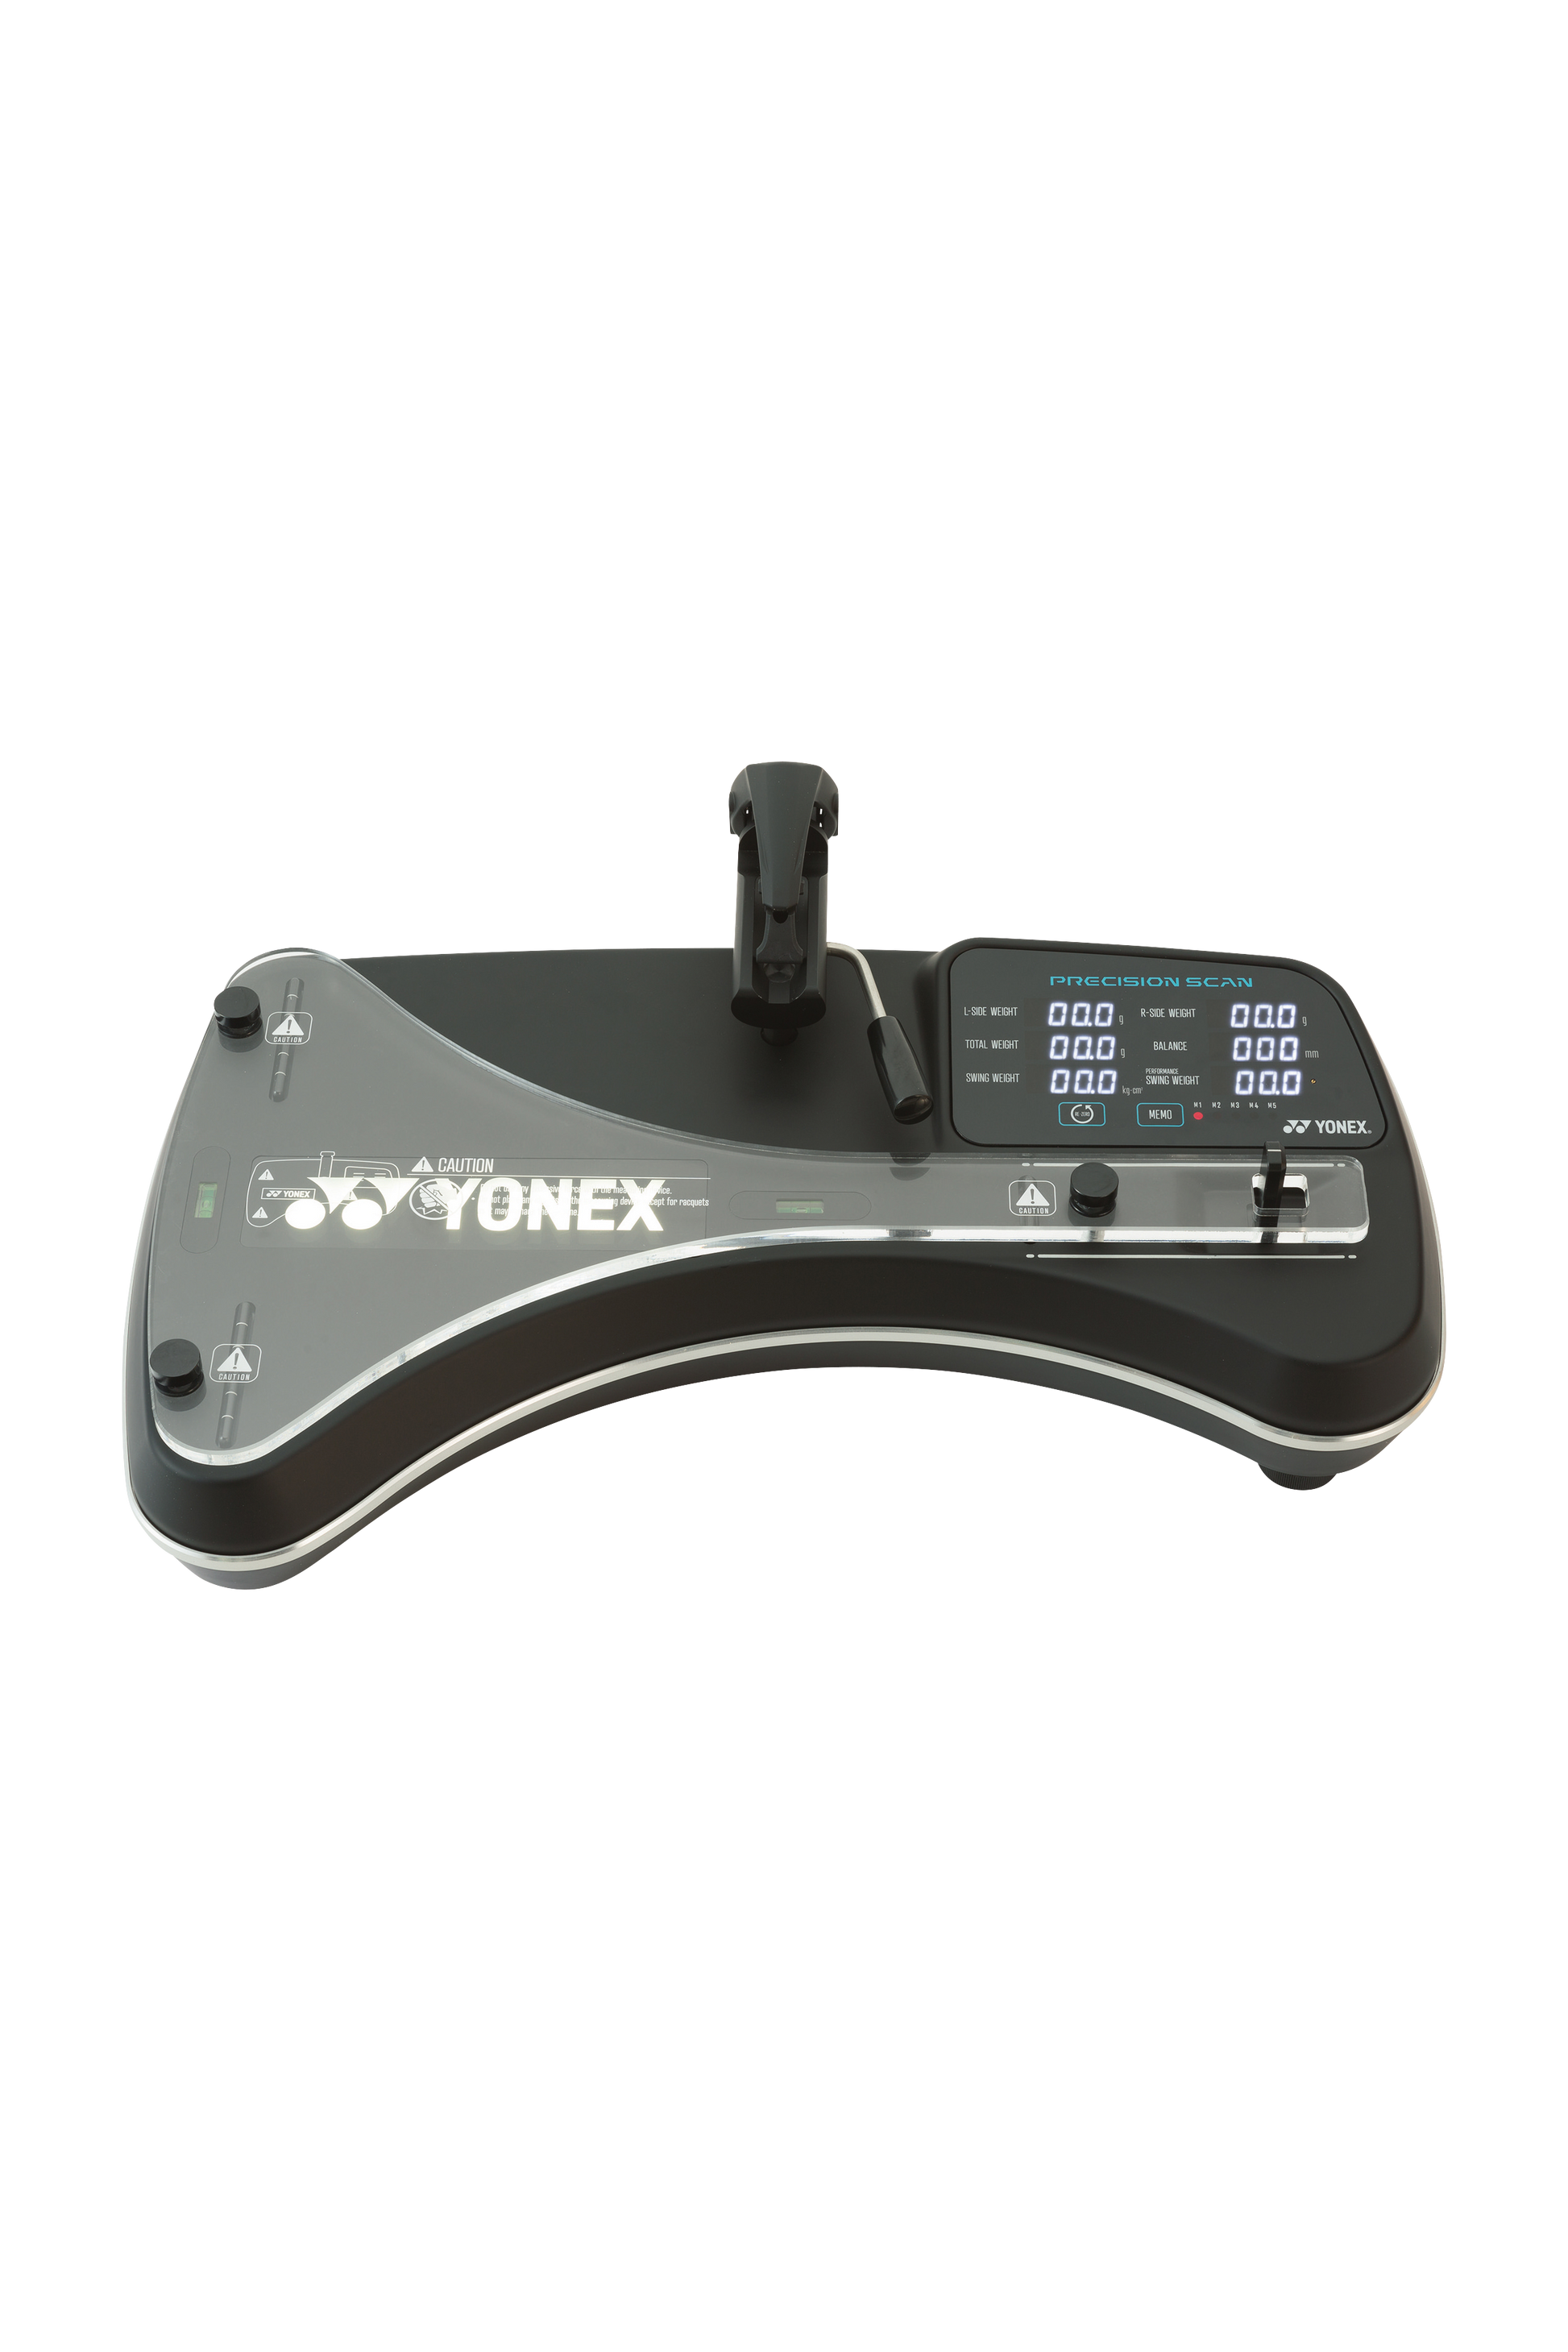 YONEX PRECISION SCAN- Swing Weight Machine - Max Sports